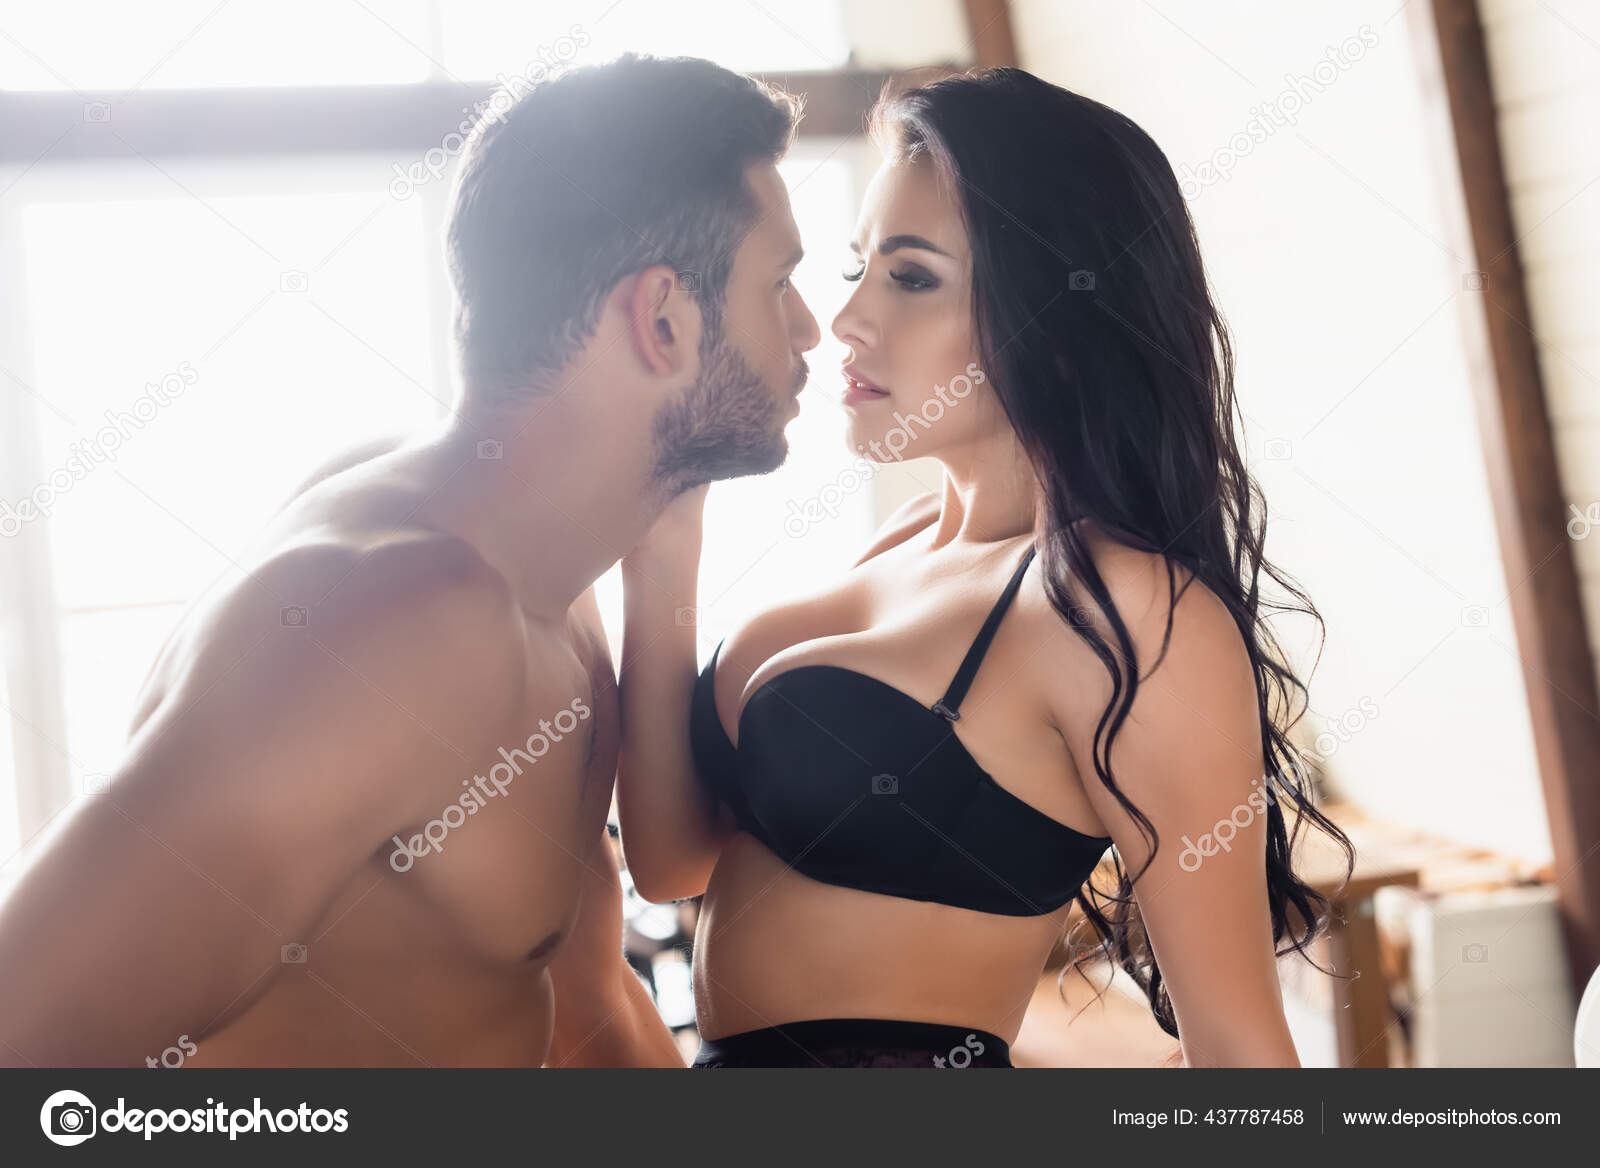 Side View Sexy Muscular Man Seductive Brunette Woman Black Bra Stock Photo by ©VitalikRadko 437787458 image pic